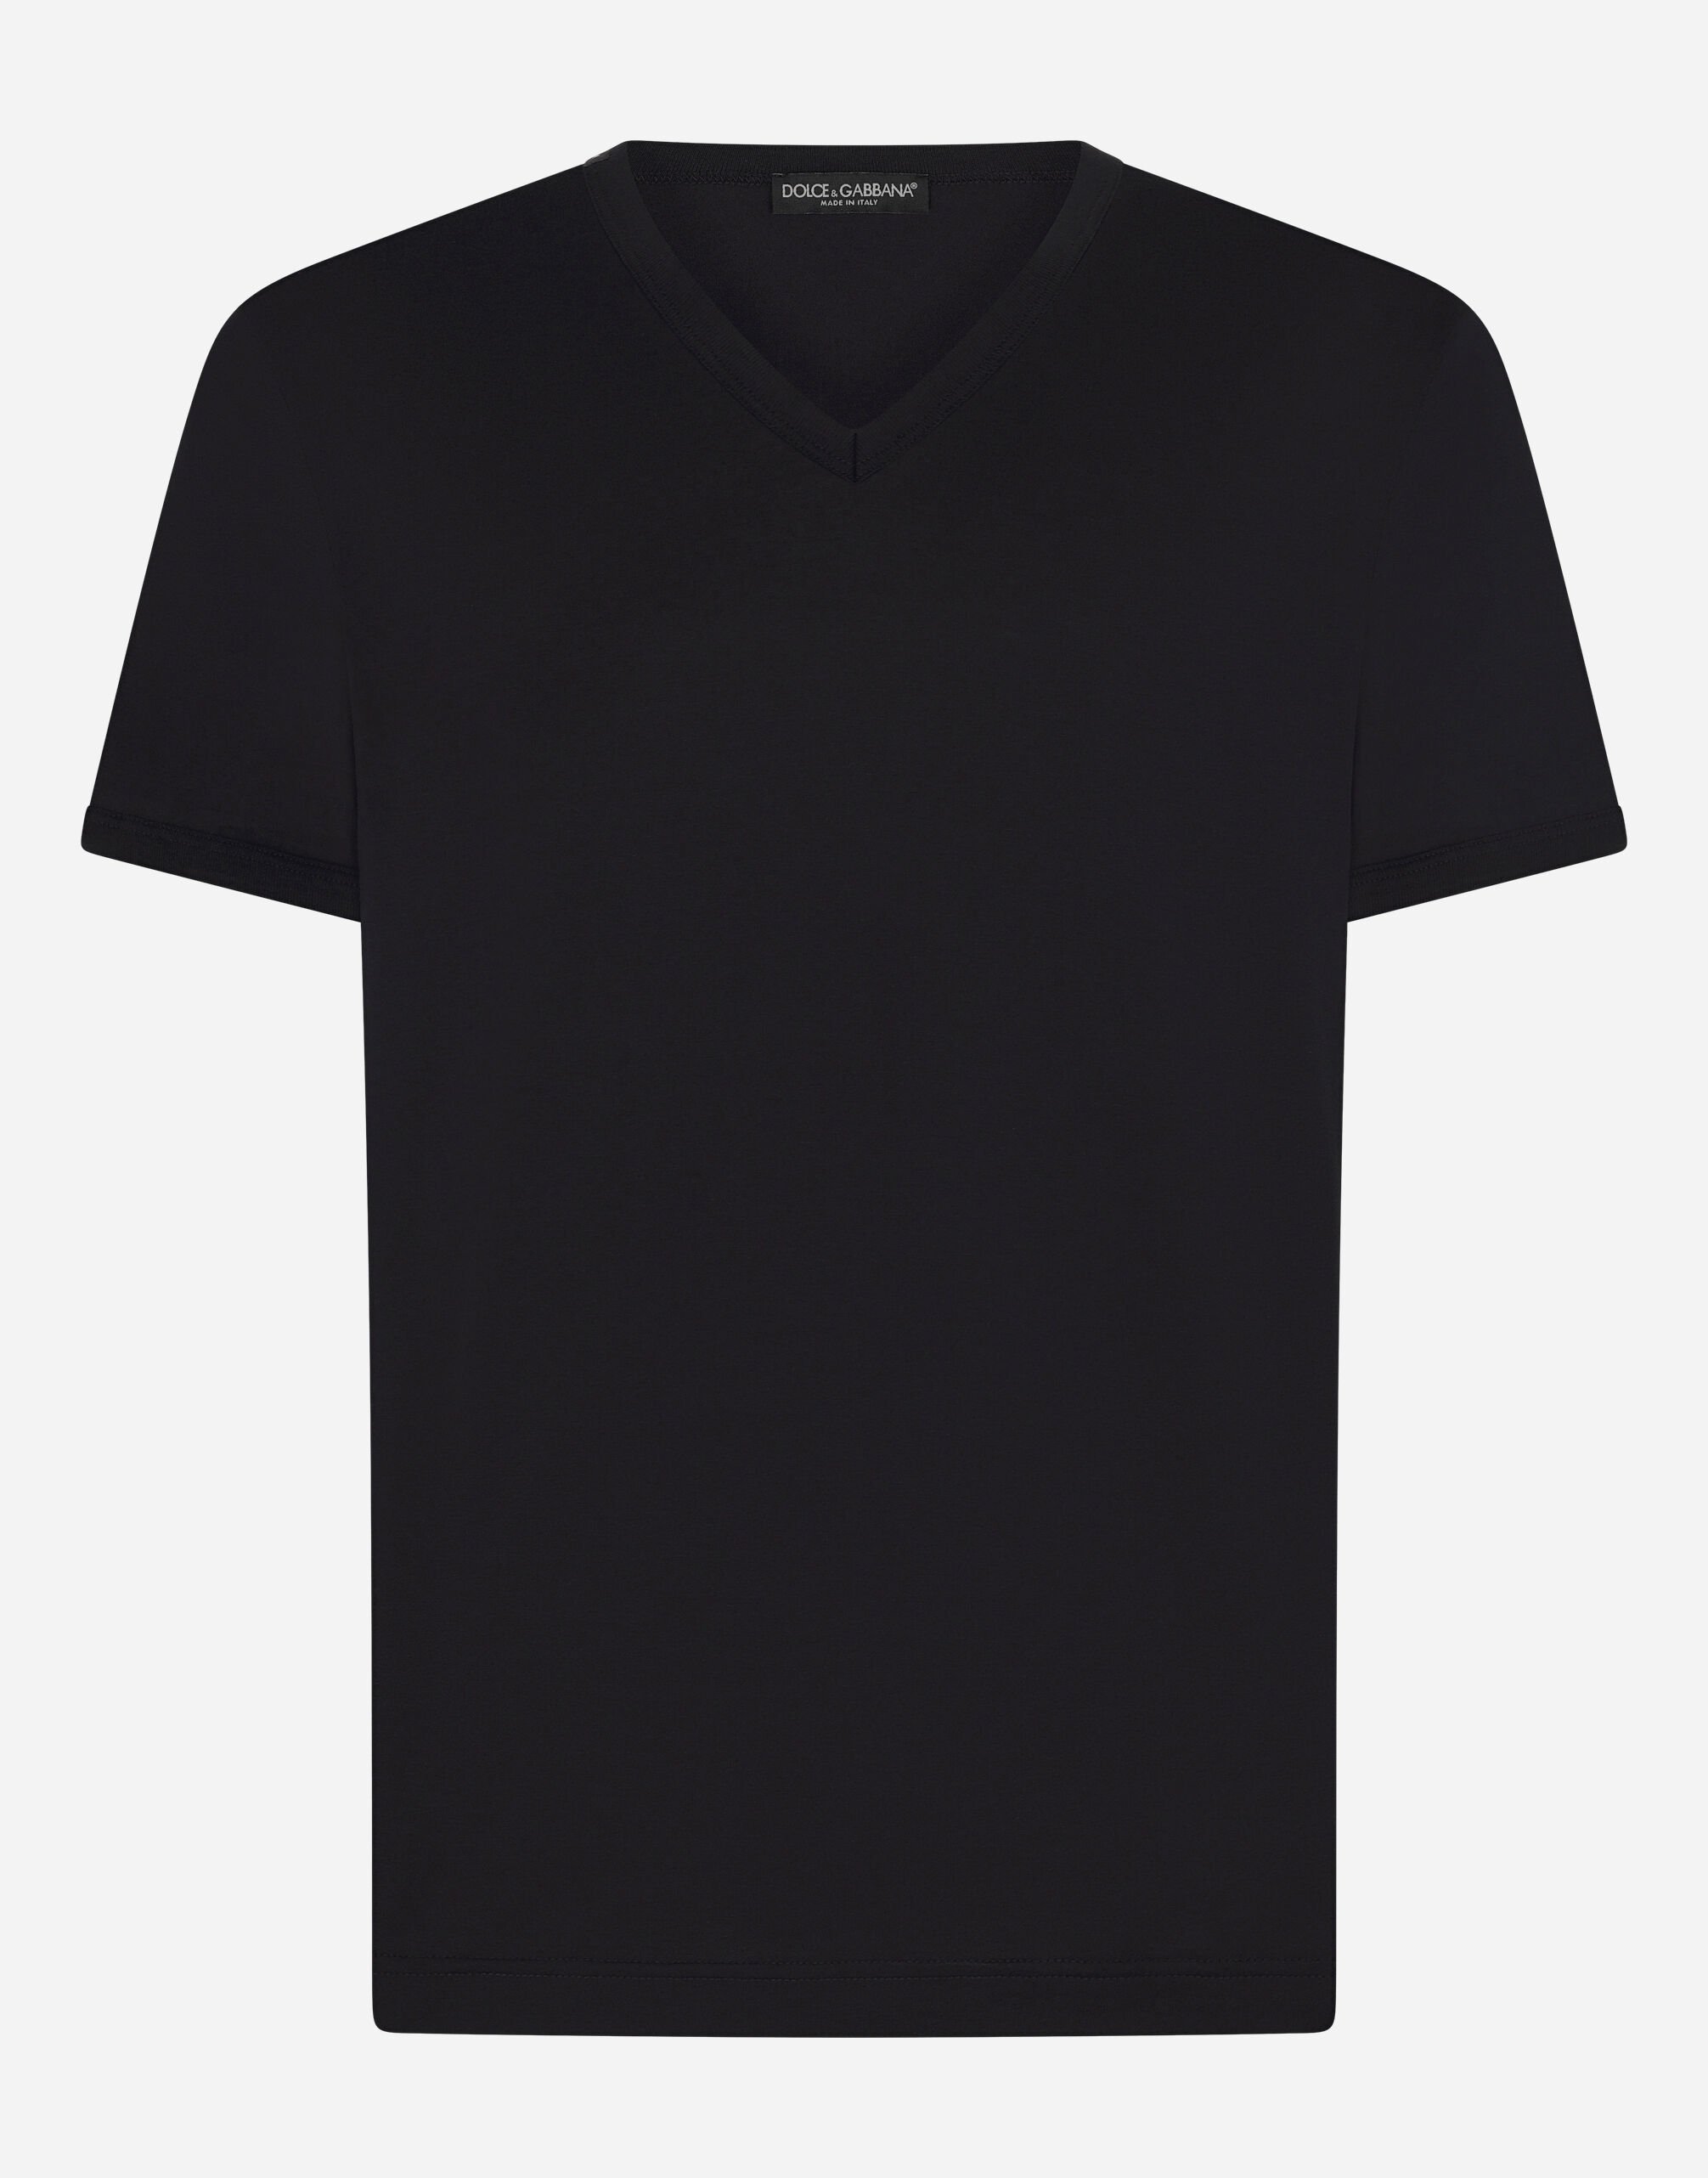 Dolce&Gabbana T-shirt in cotone Nero GY6IETFUFJR